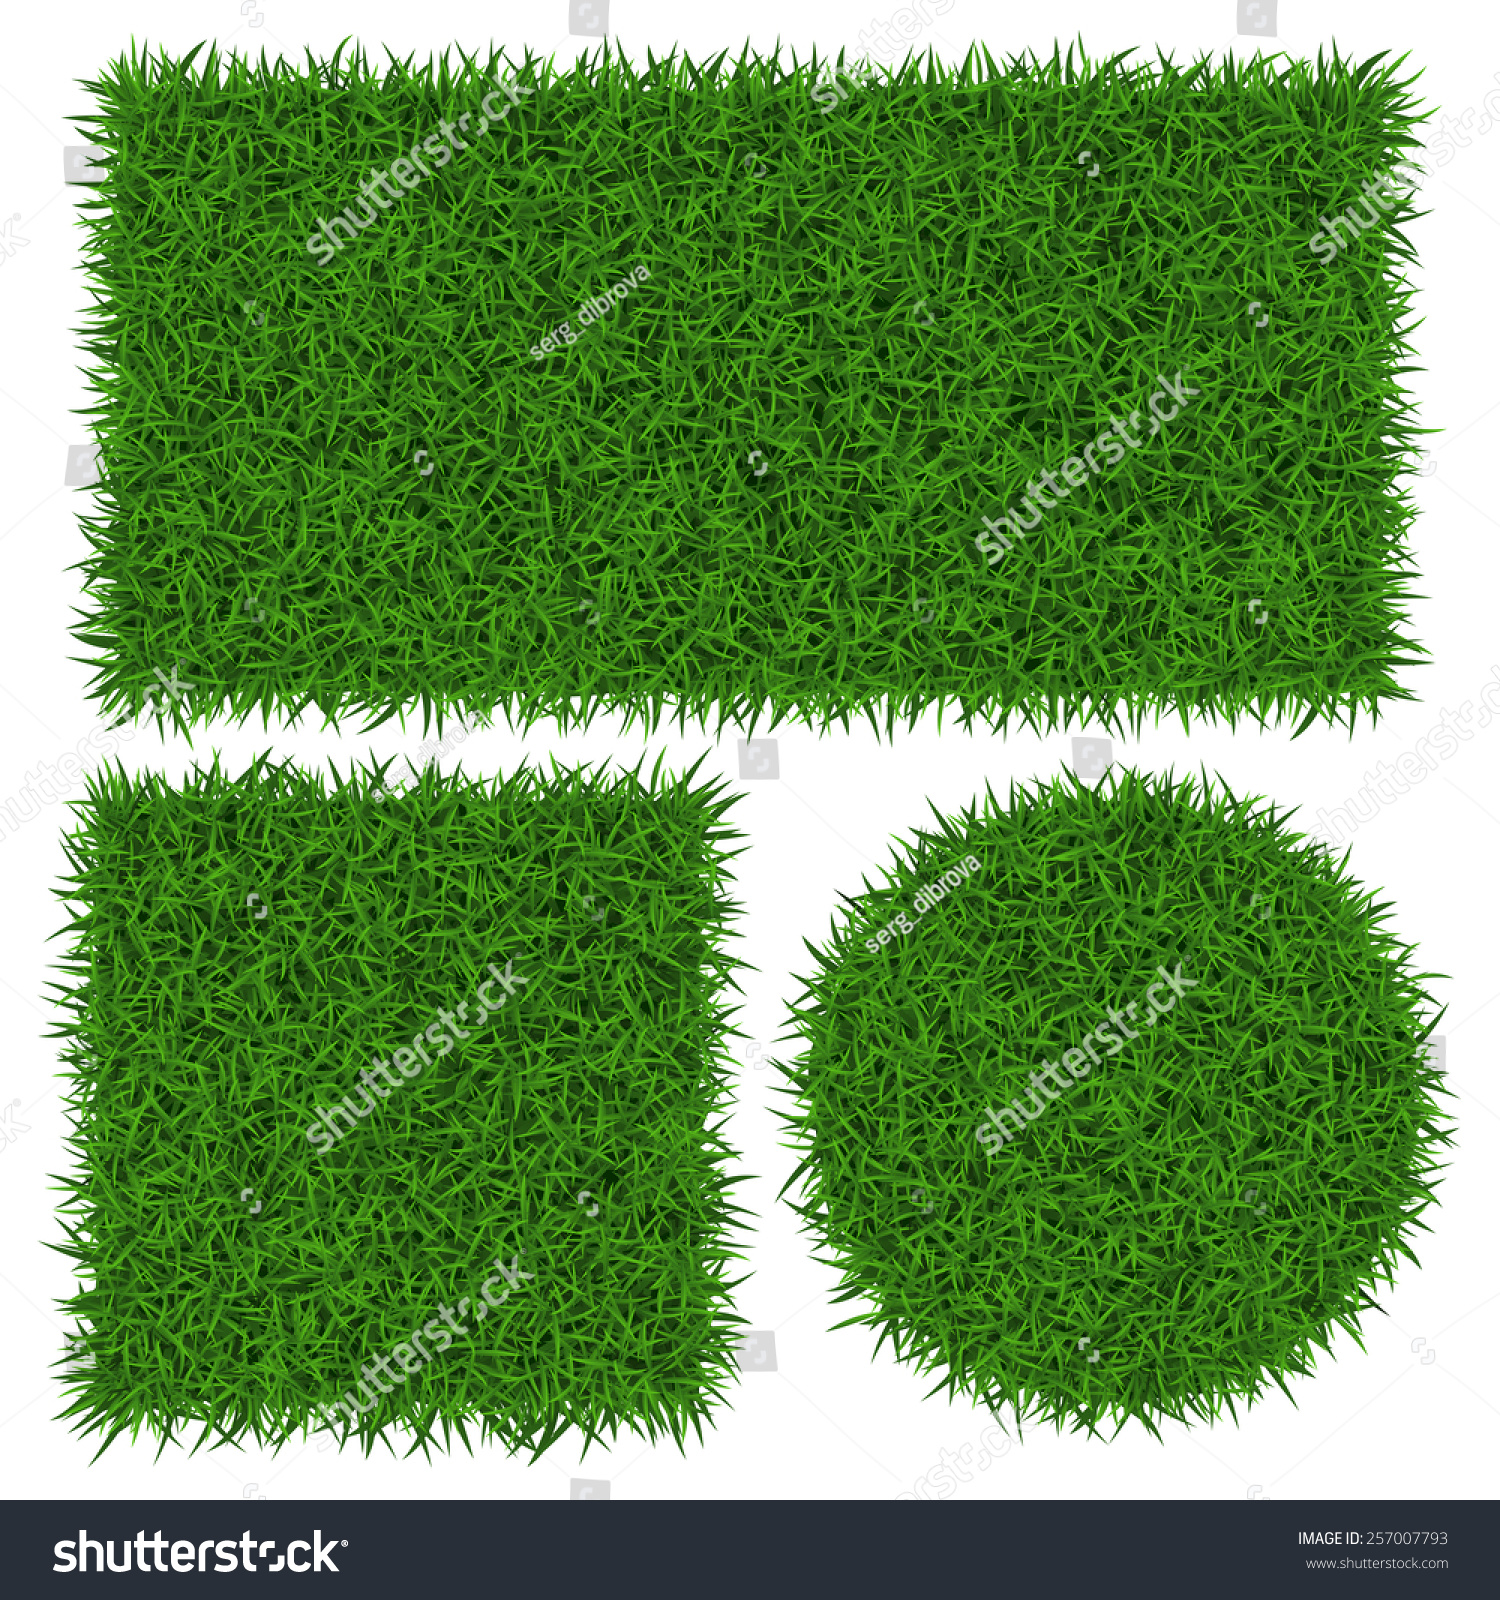 Green Grass Banners Vector Illustration Stock Vector 257007793 ...